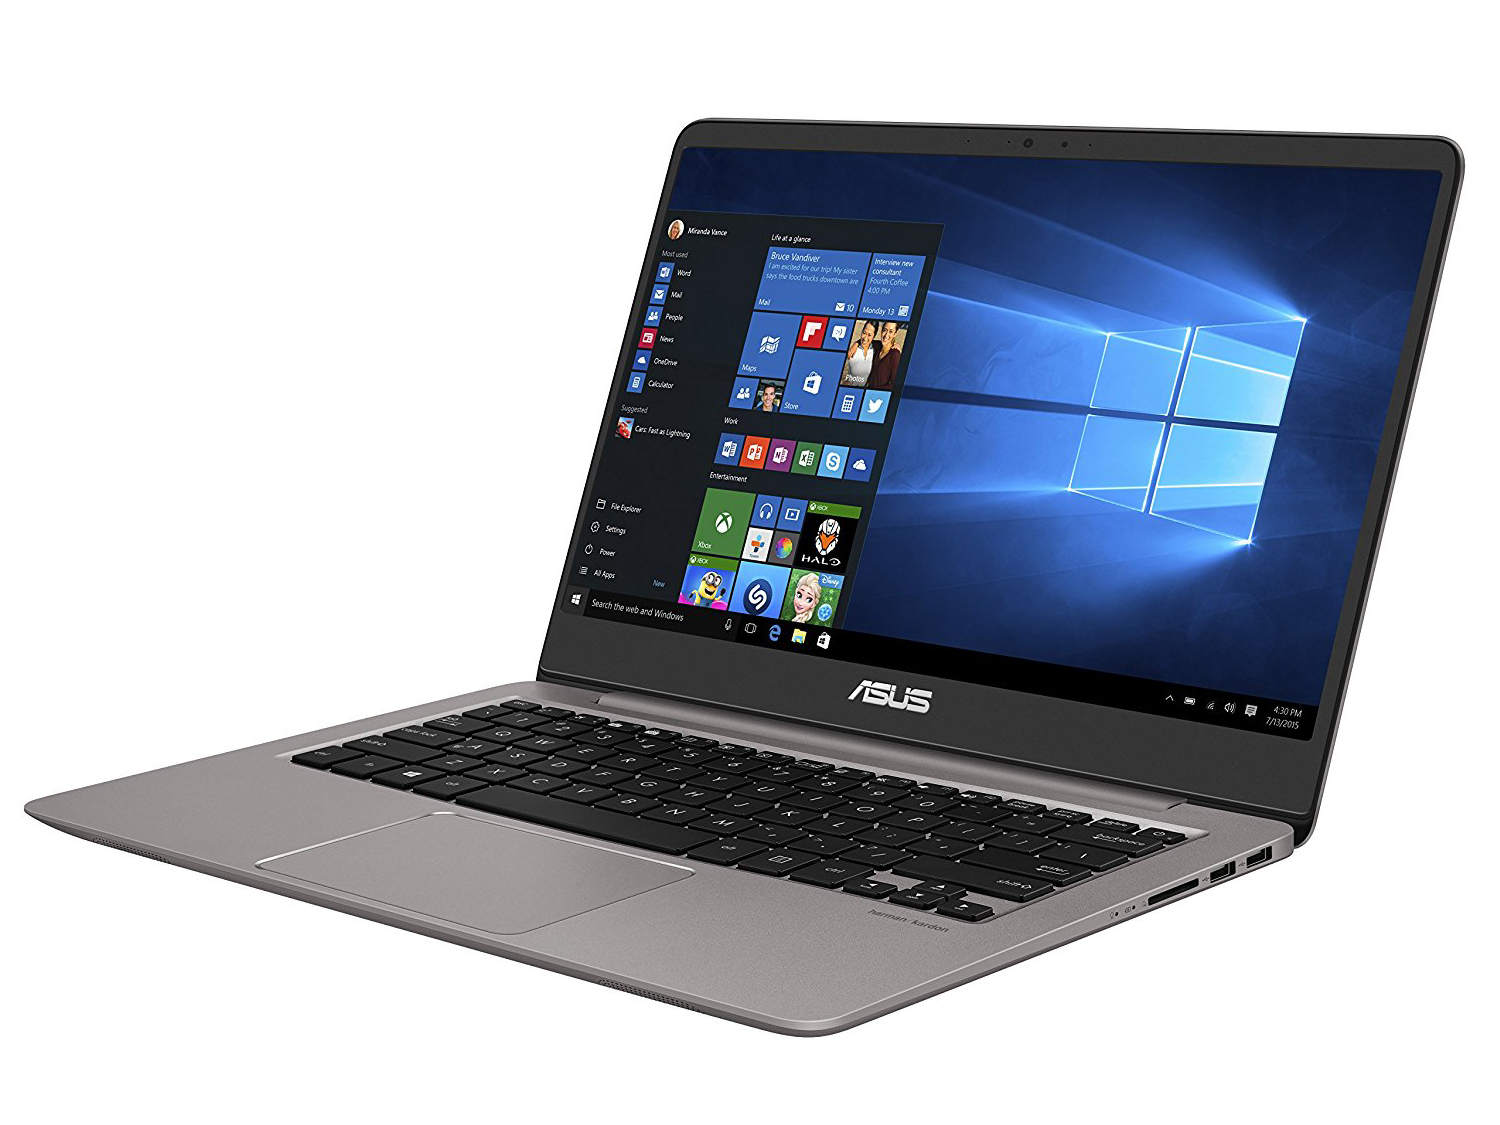 Asus ZenBook UX3410UQ (7500U, 940MX, Full HD) Laptop Review